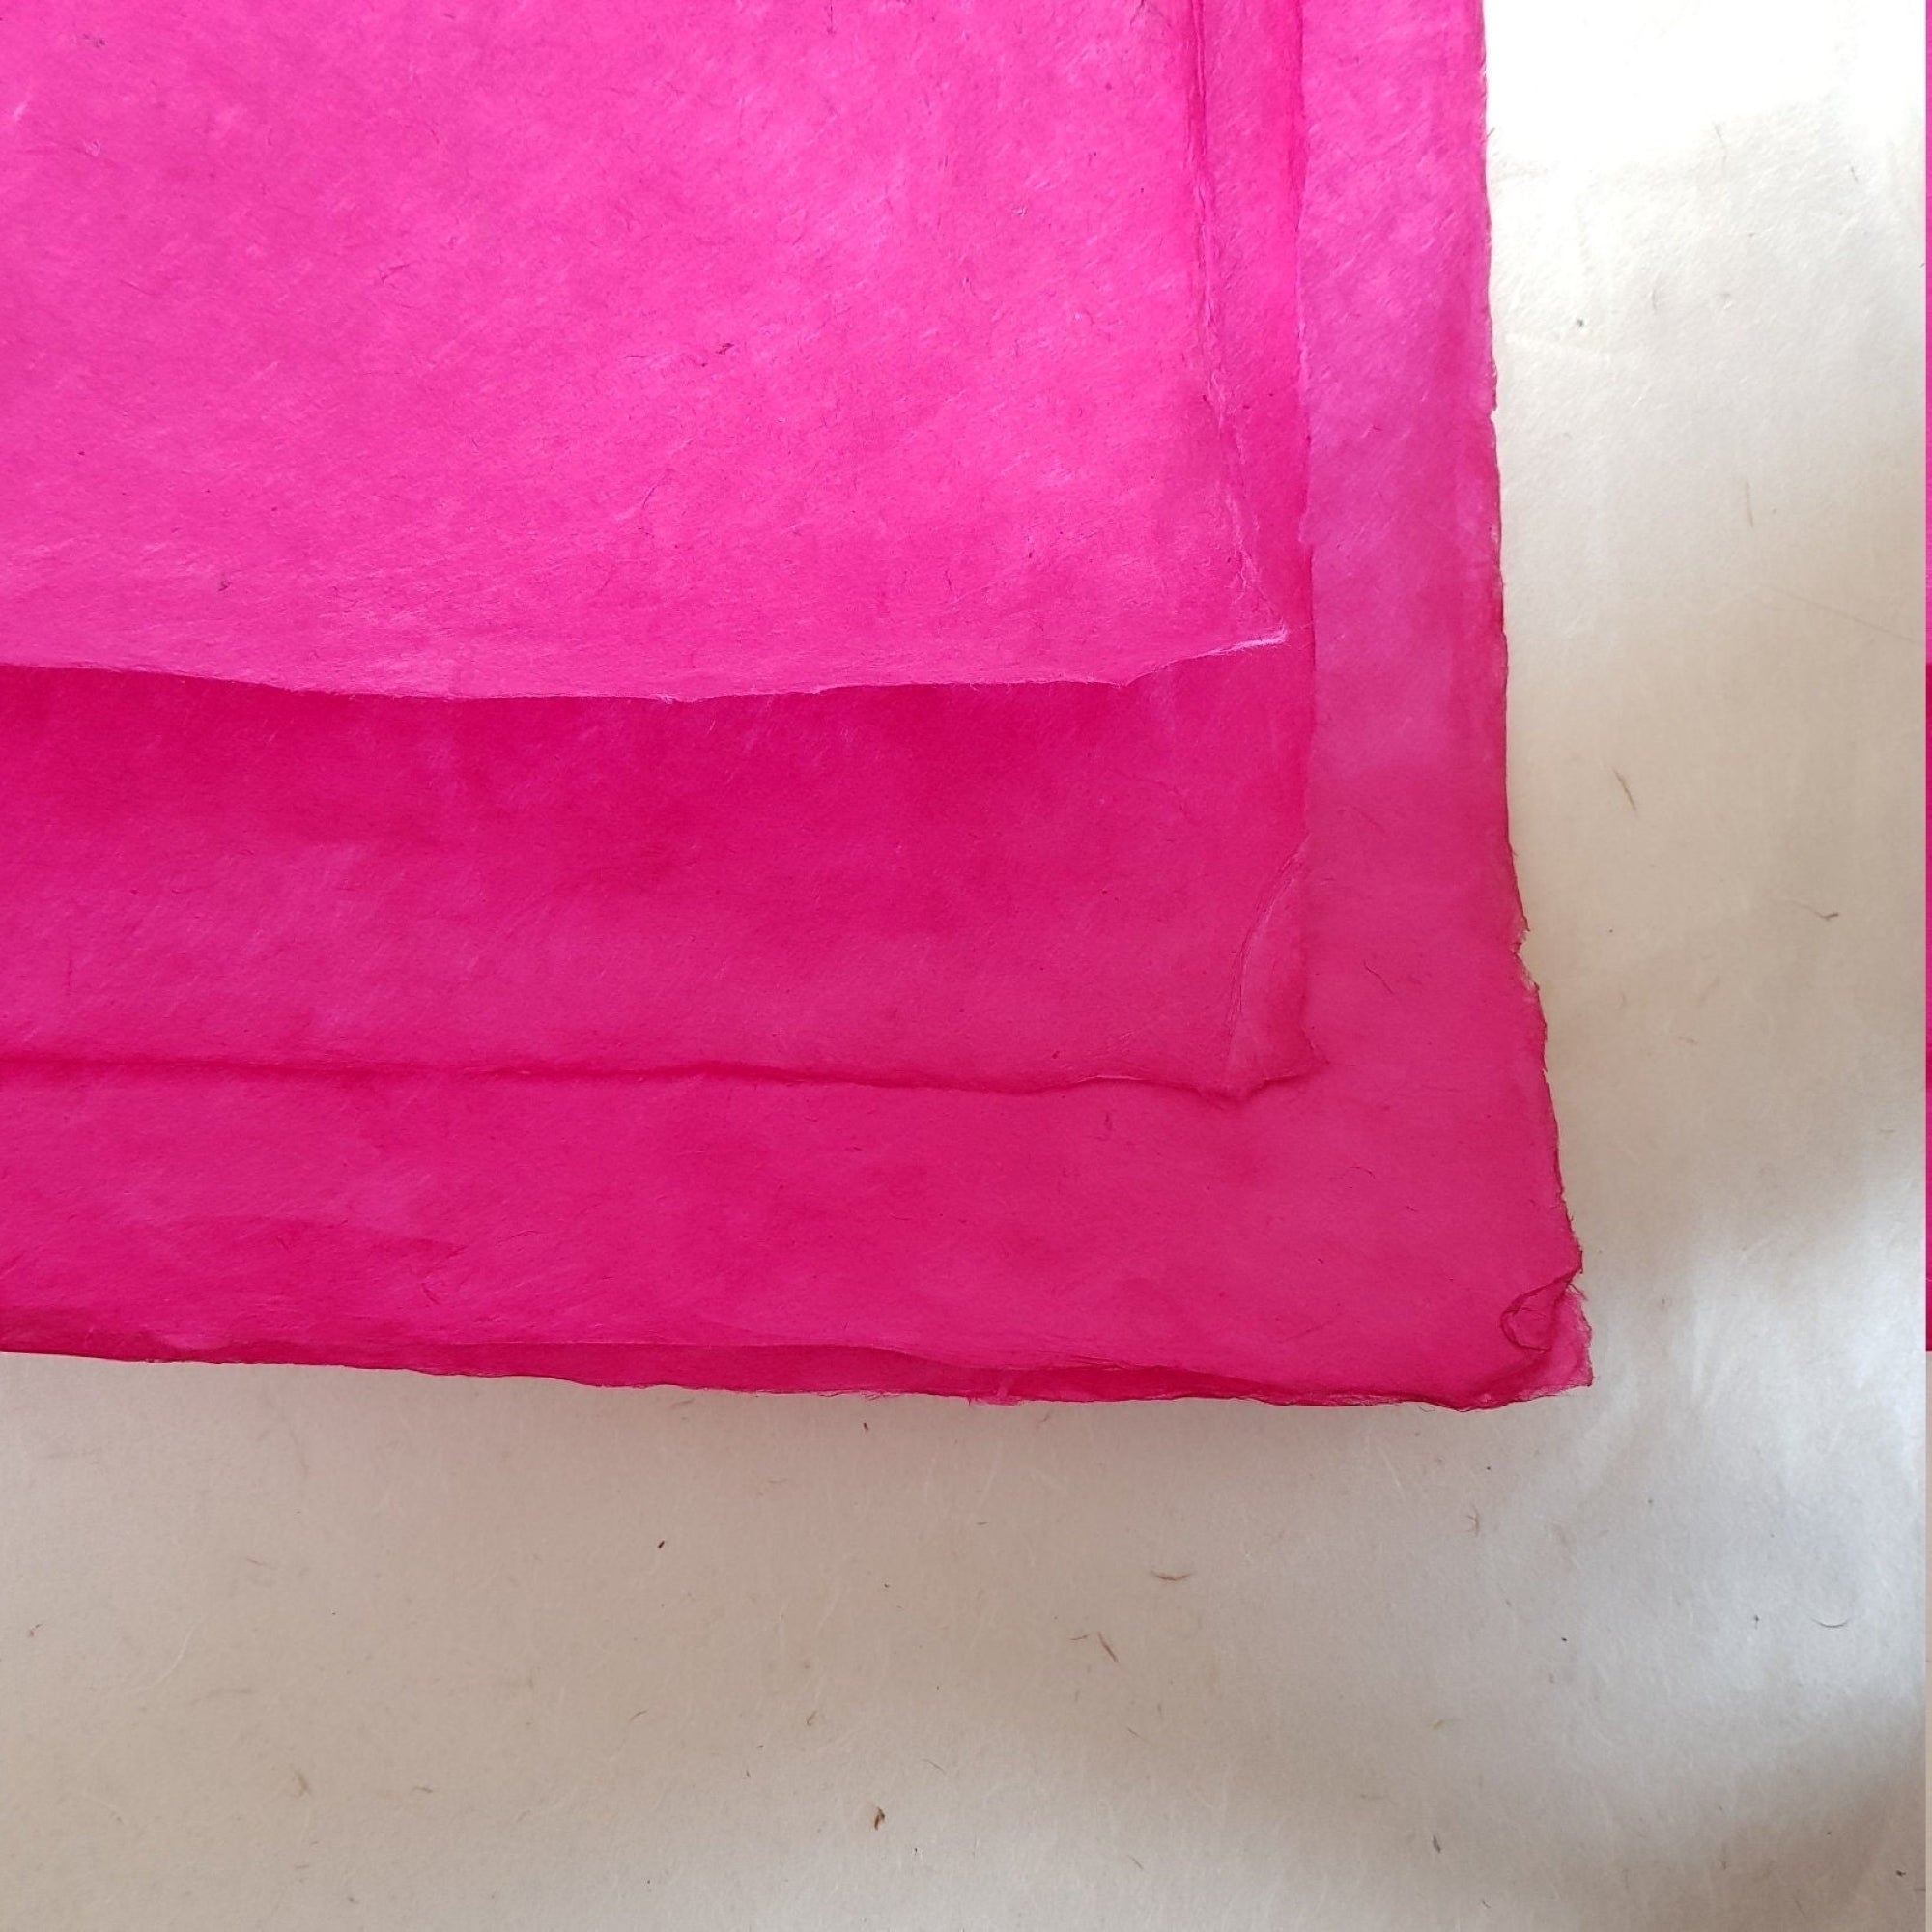 Hot Pink Lokta Paper Handmade in the Himalayas 120GSM